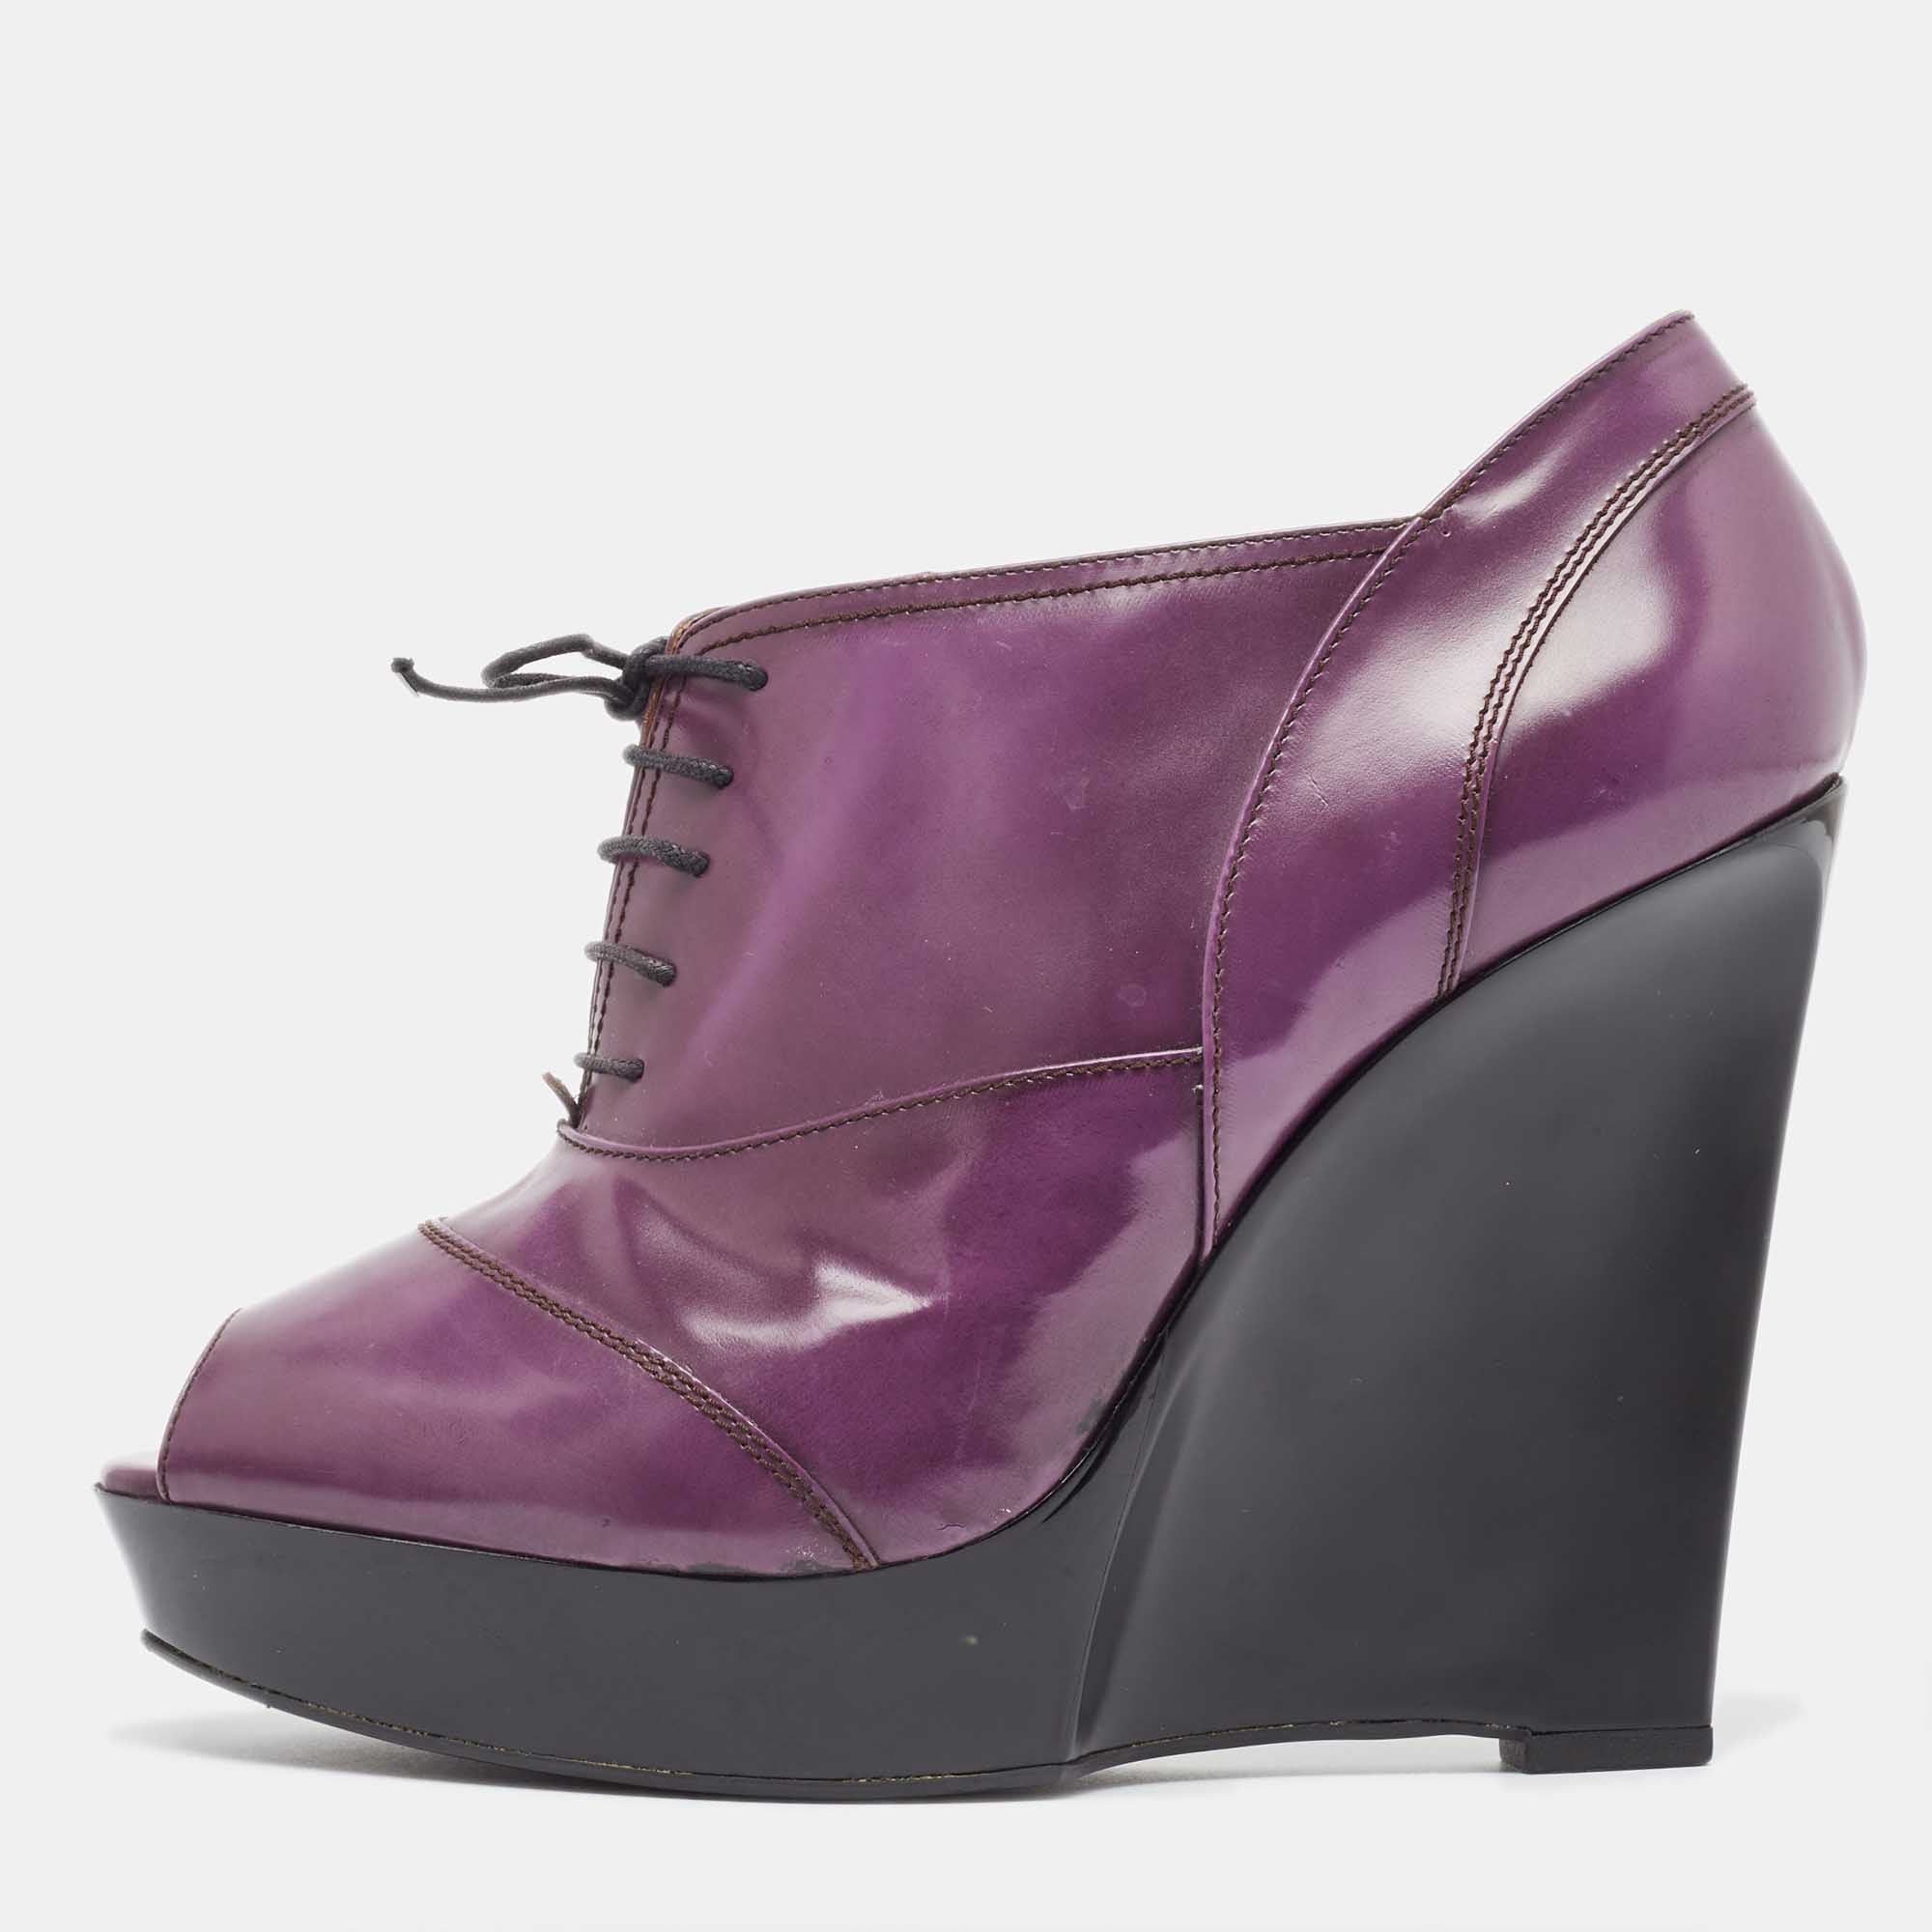 Marni purple patent wedge peep toe boots size 39